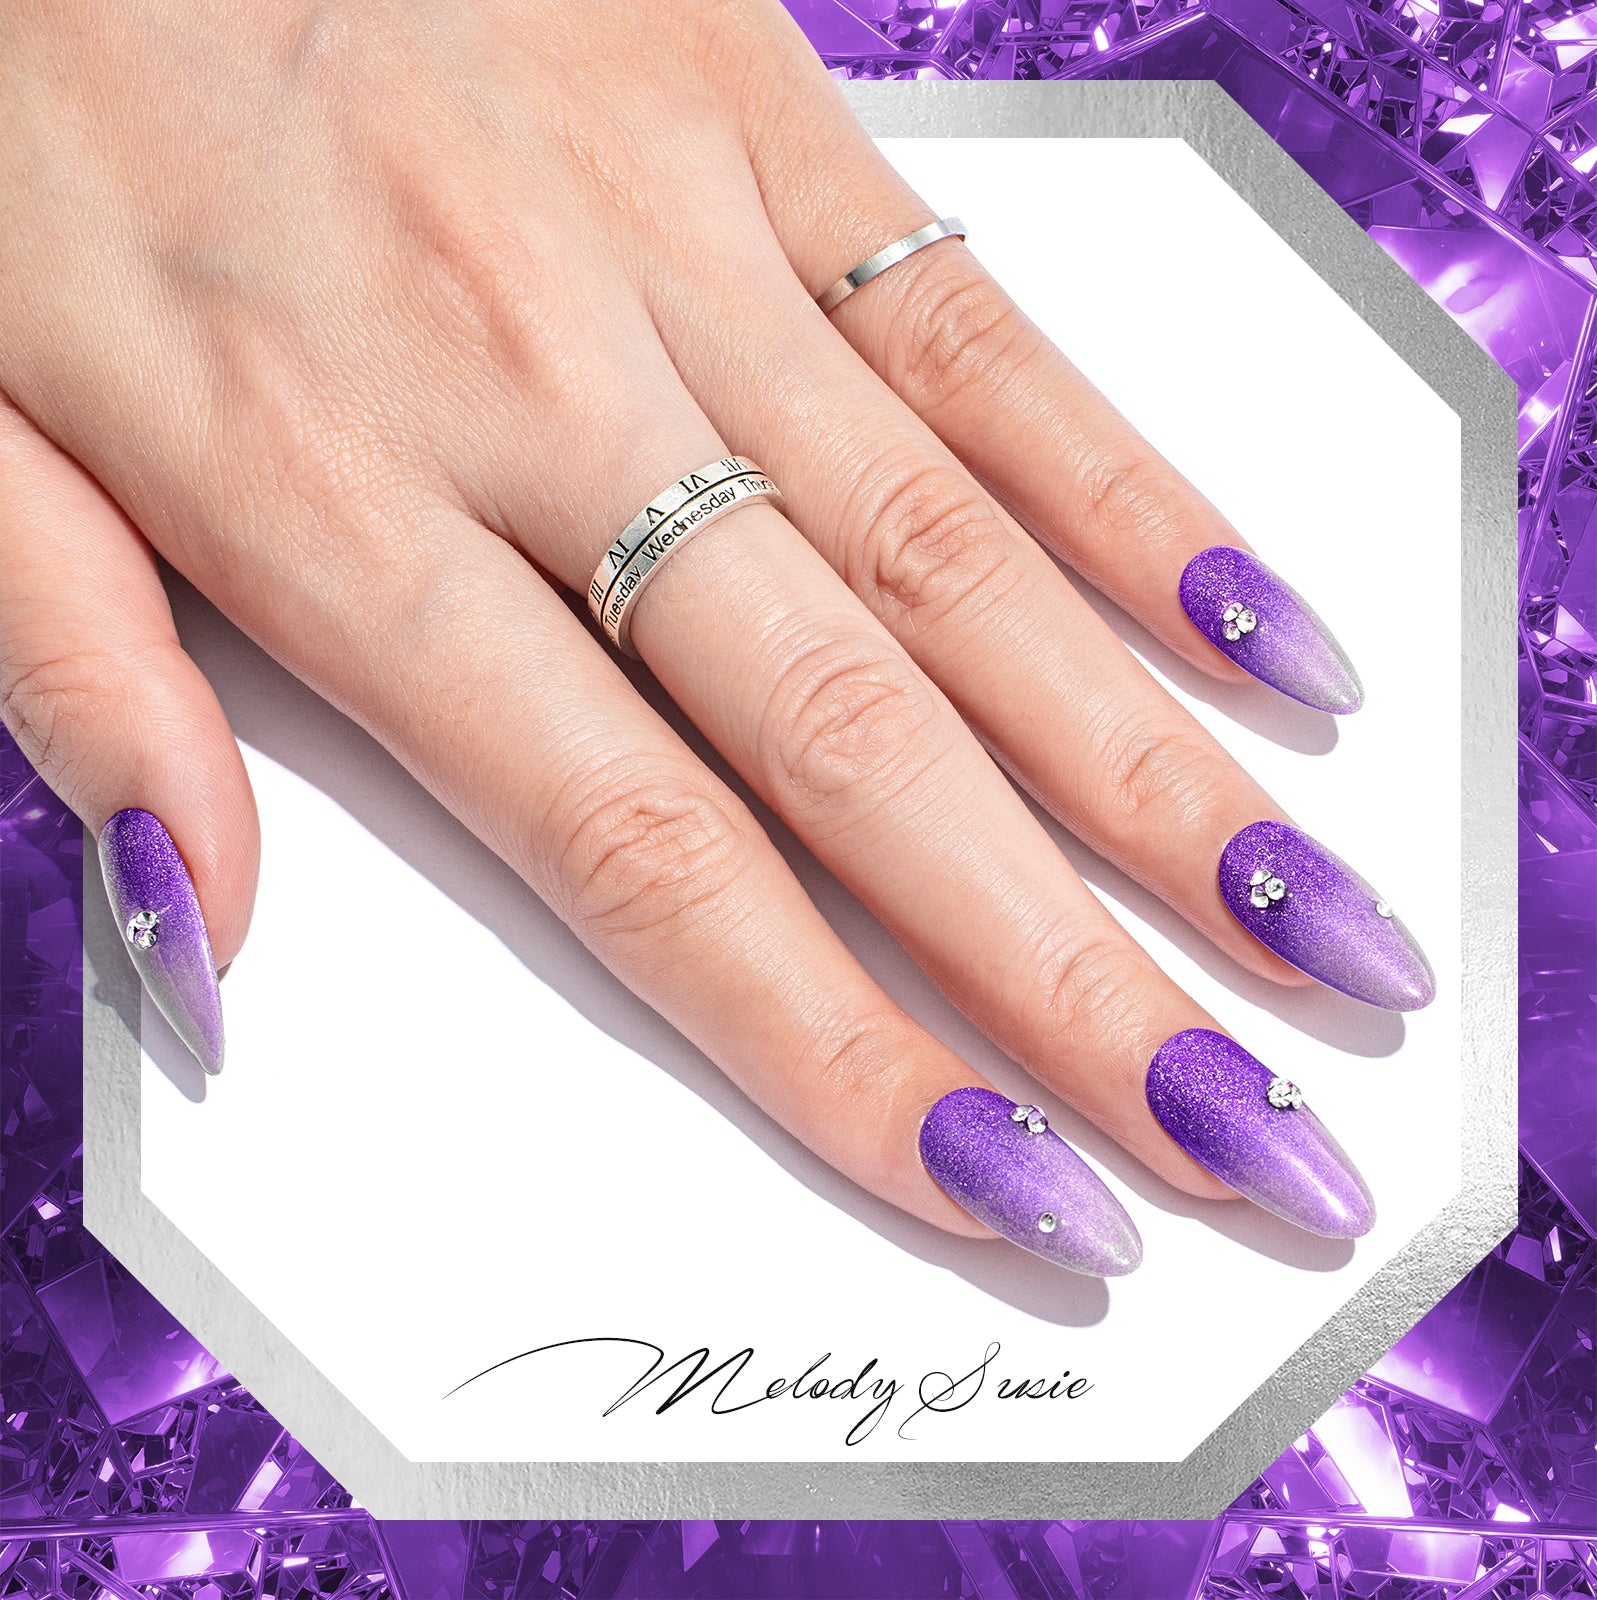 Z055 Purple Shimmer Glitter  - Gel Nail Polish(15ml)